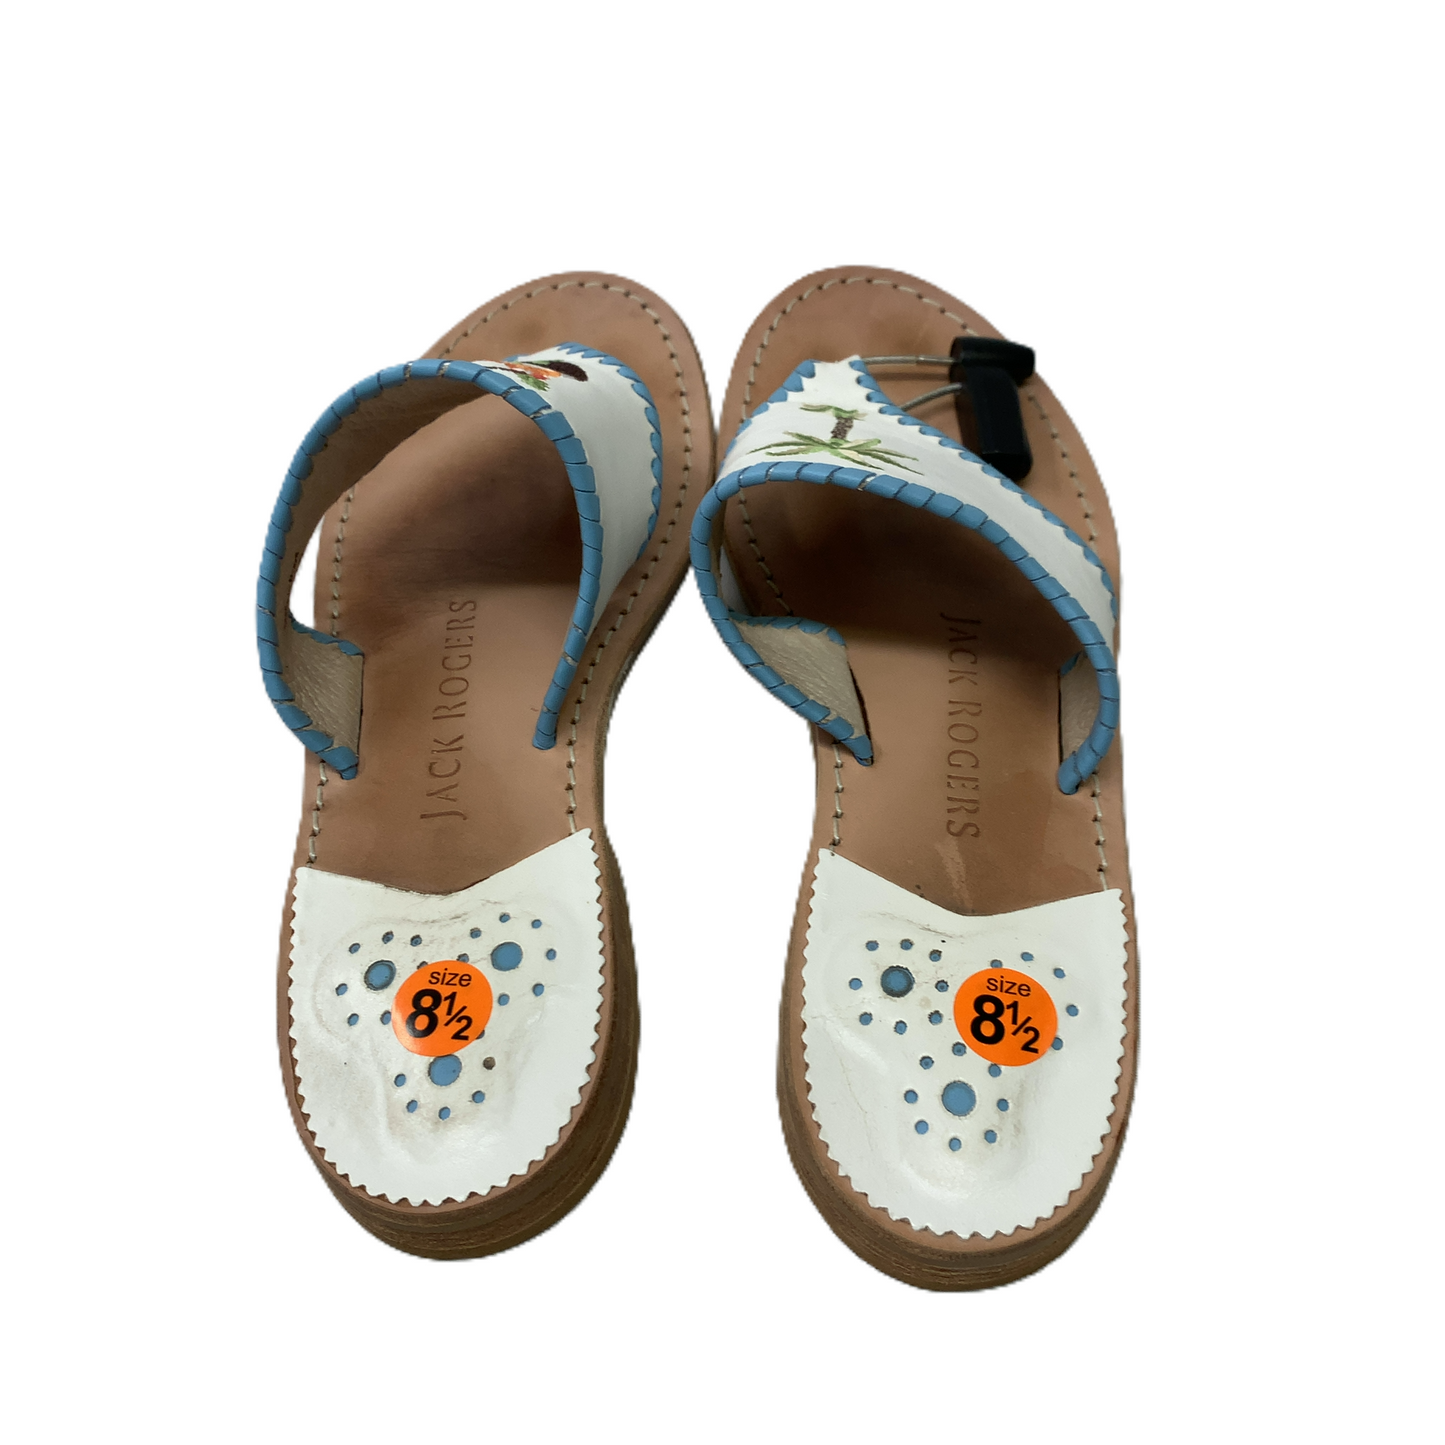 Blue & White  Sandals Designer By Jack Rogers  Size: 8.5